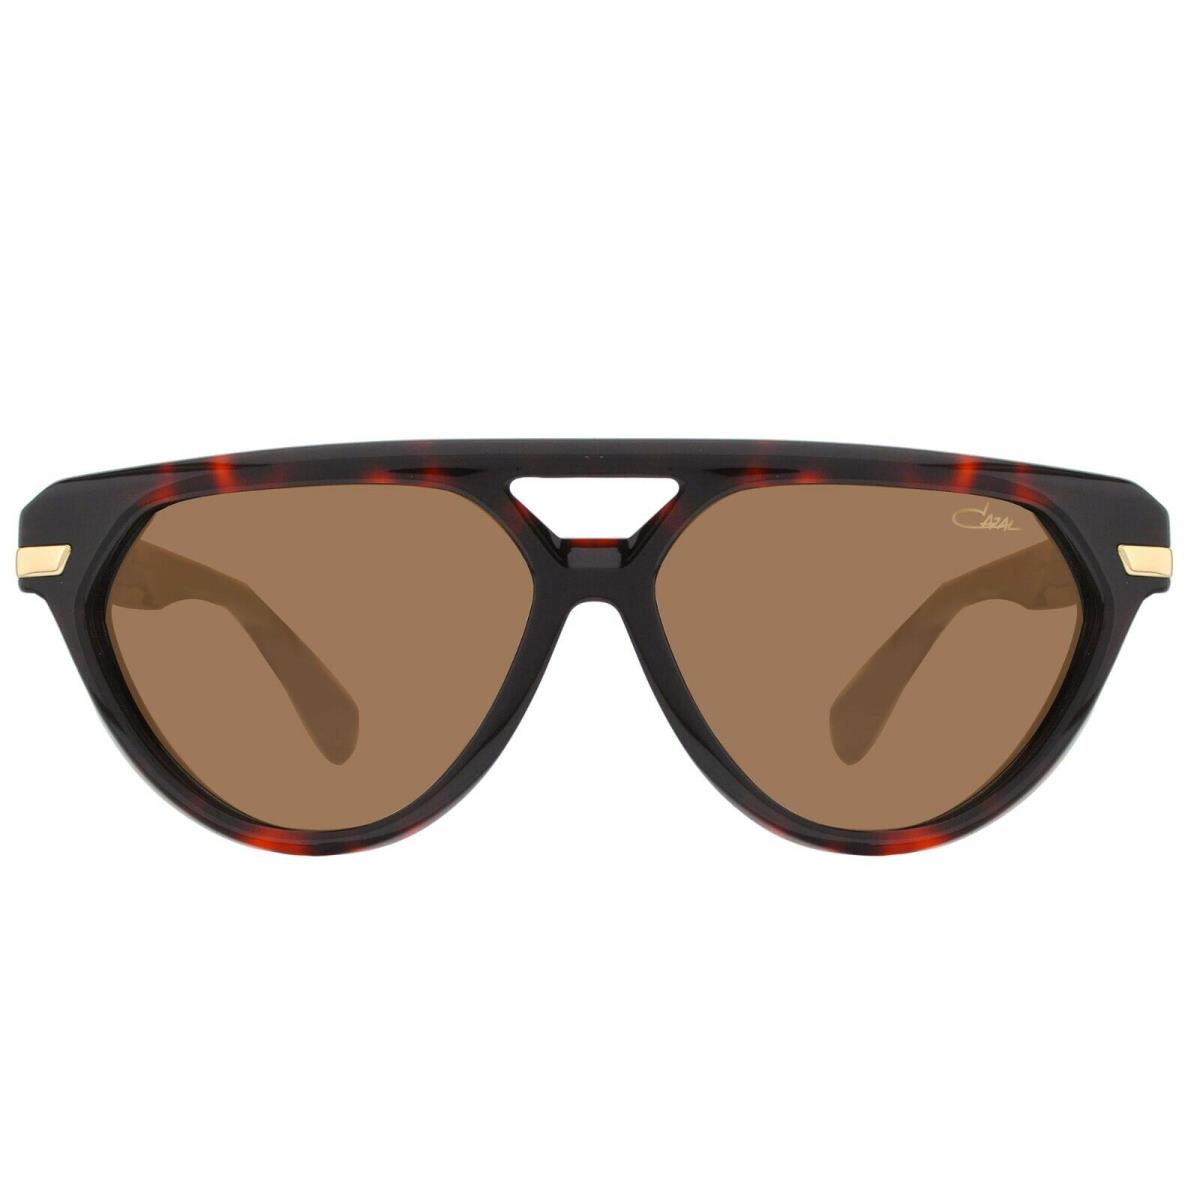 Cazal 8503 Shiny Tortoise/brown Shaded 002 Sunglasses